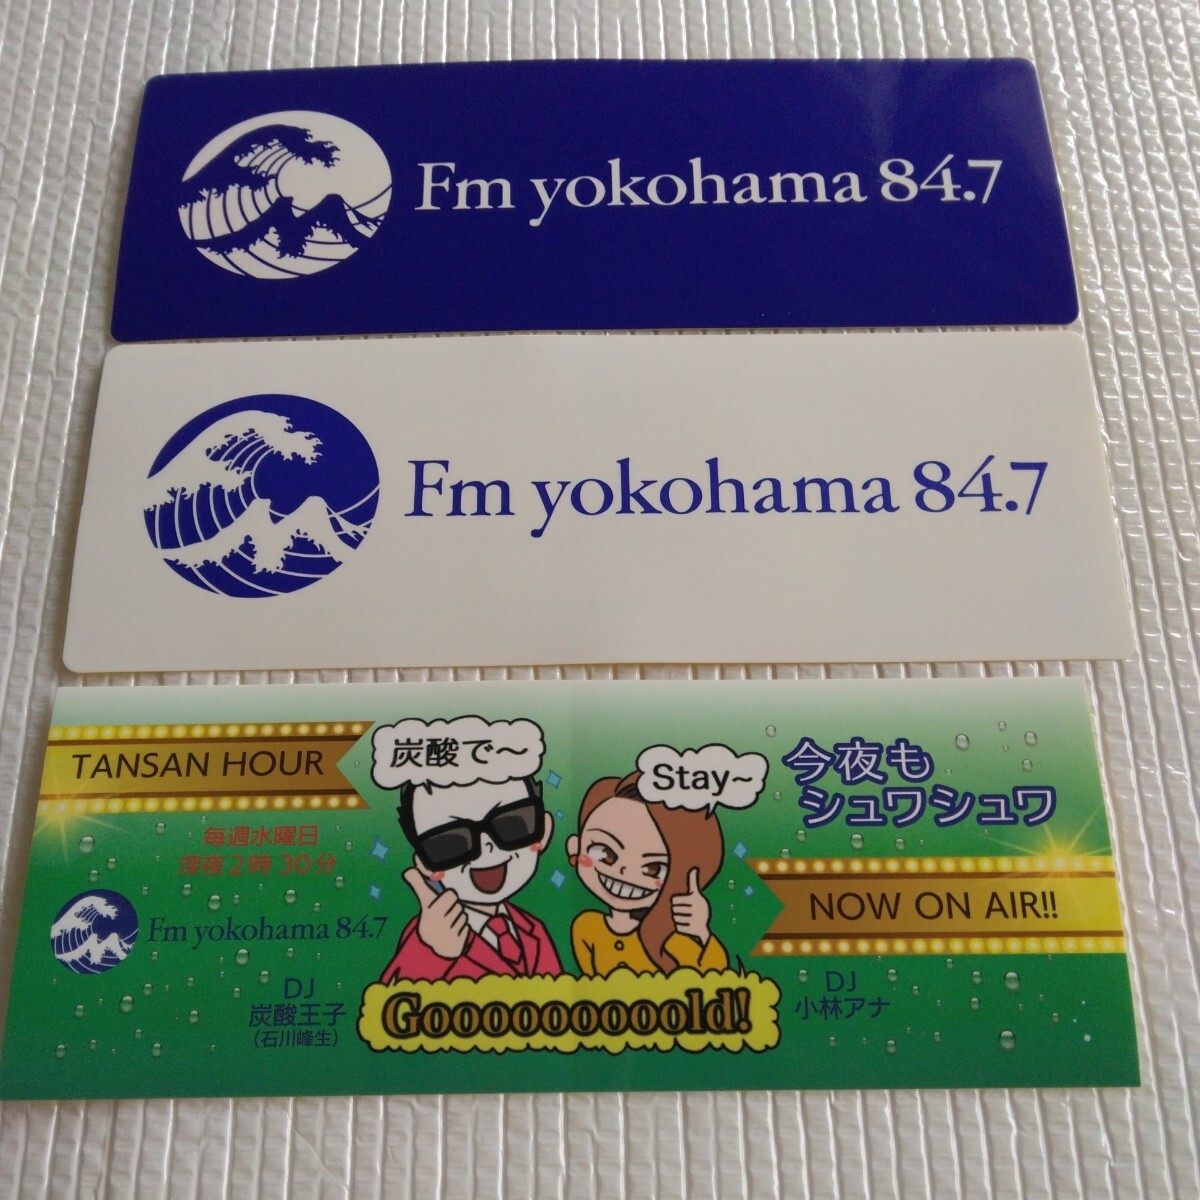 FMヨコハマ Fm yokohama ステッカー FM横浜 セットの画像1